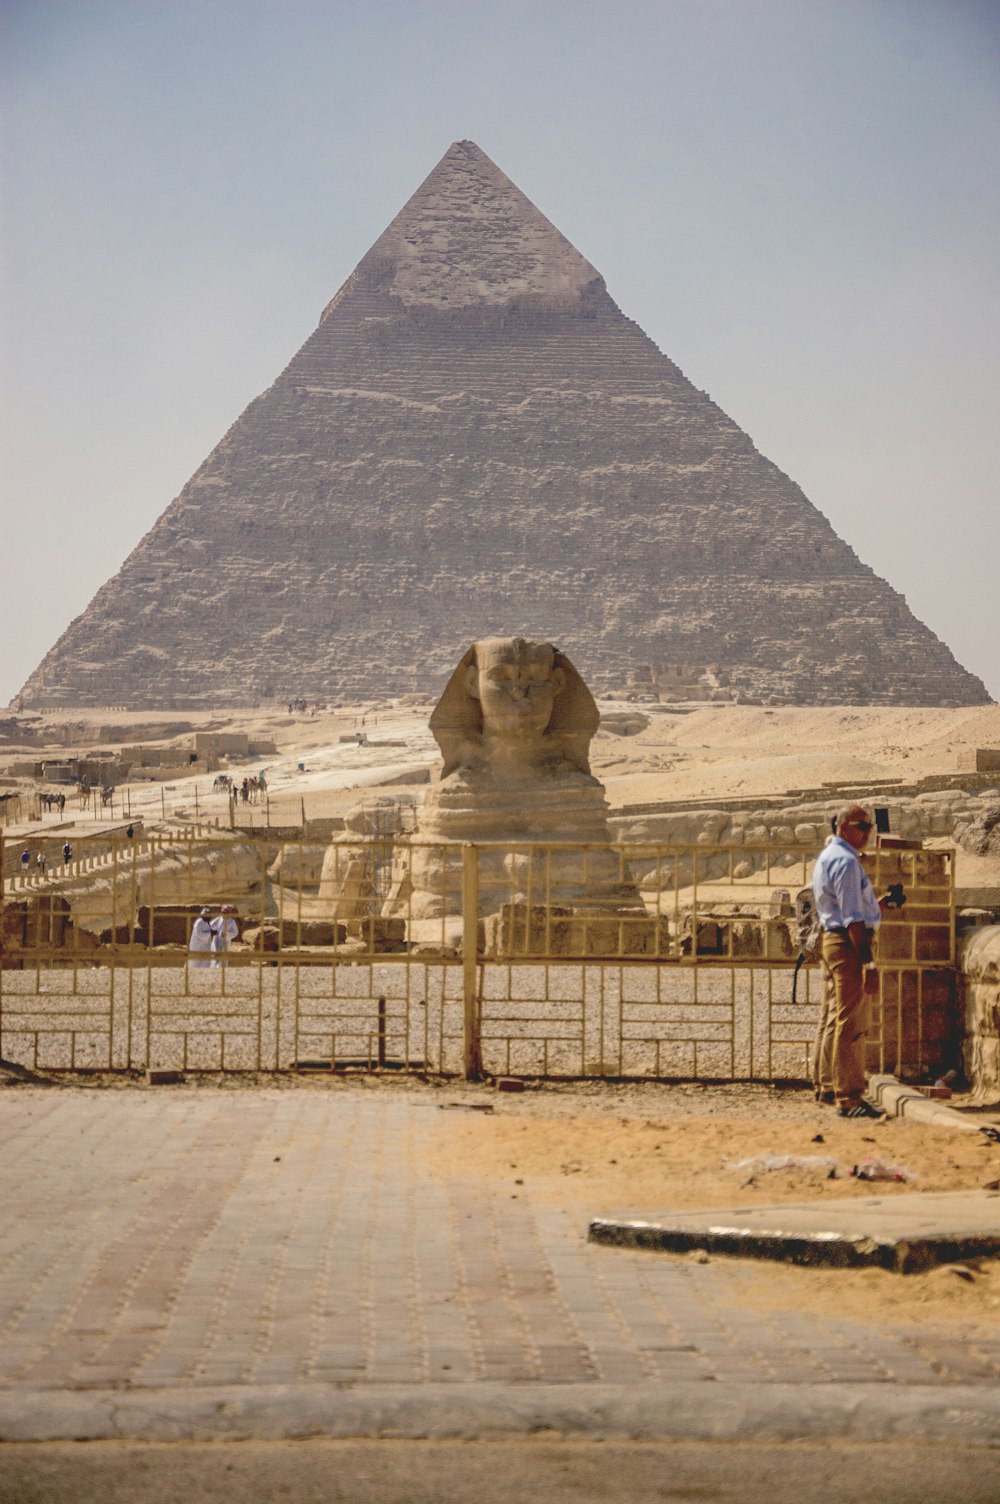 man in brown jacket standing near pyramid during daytime